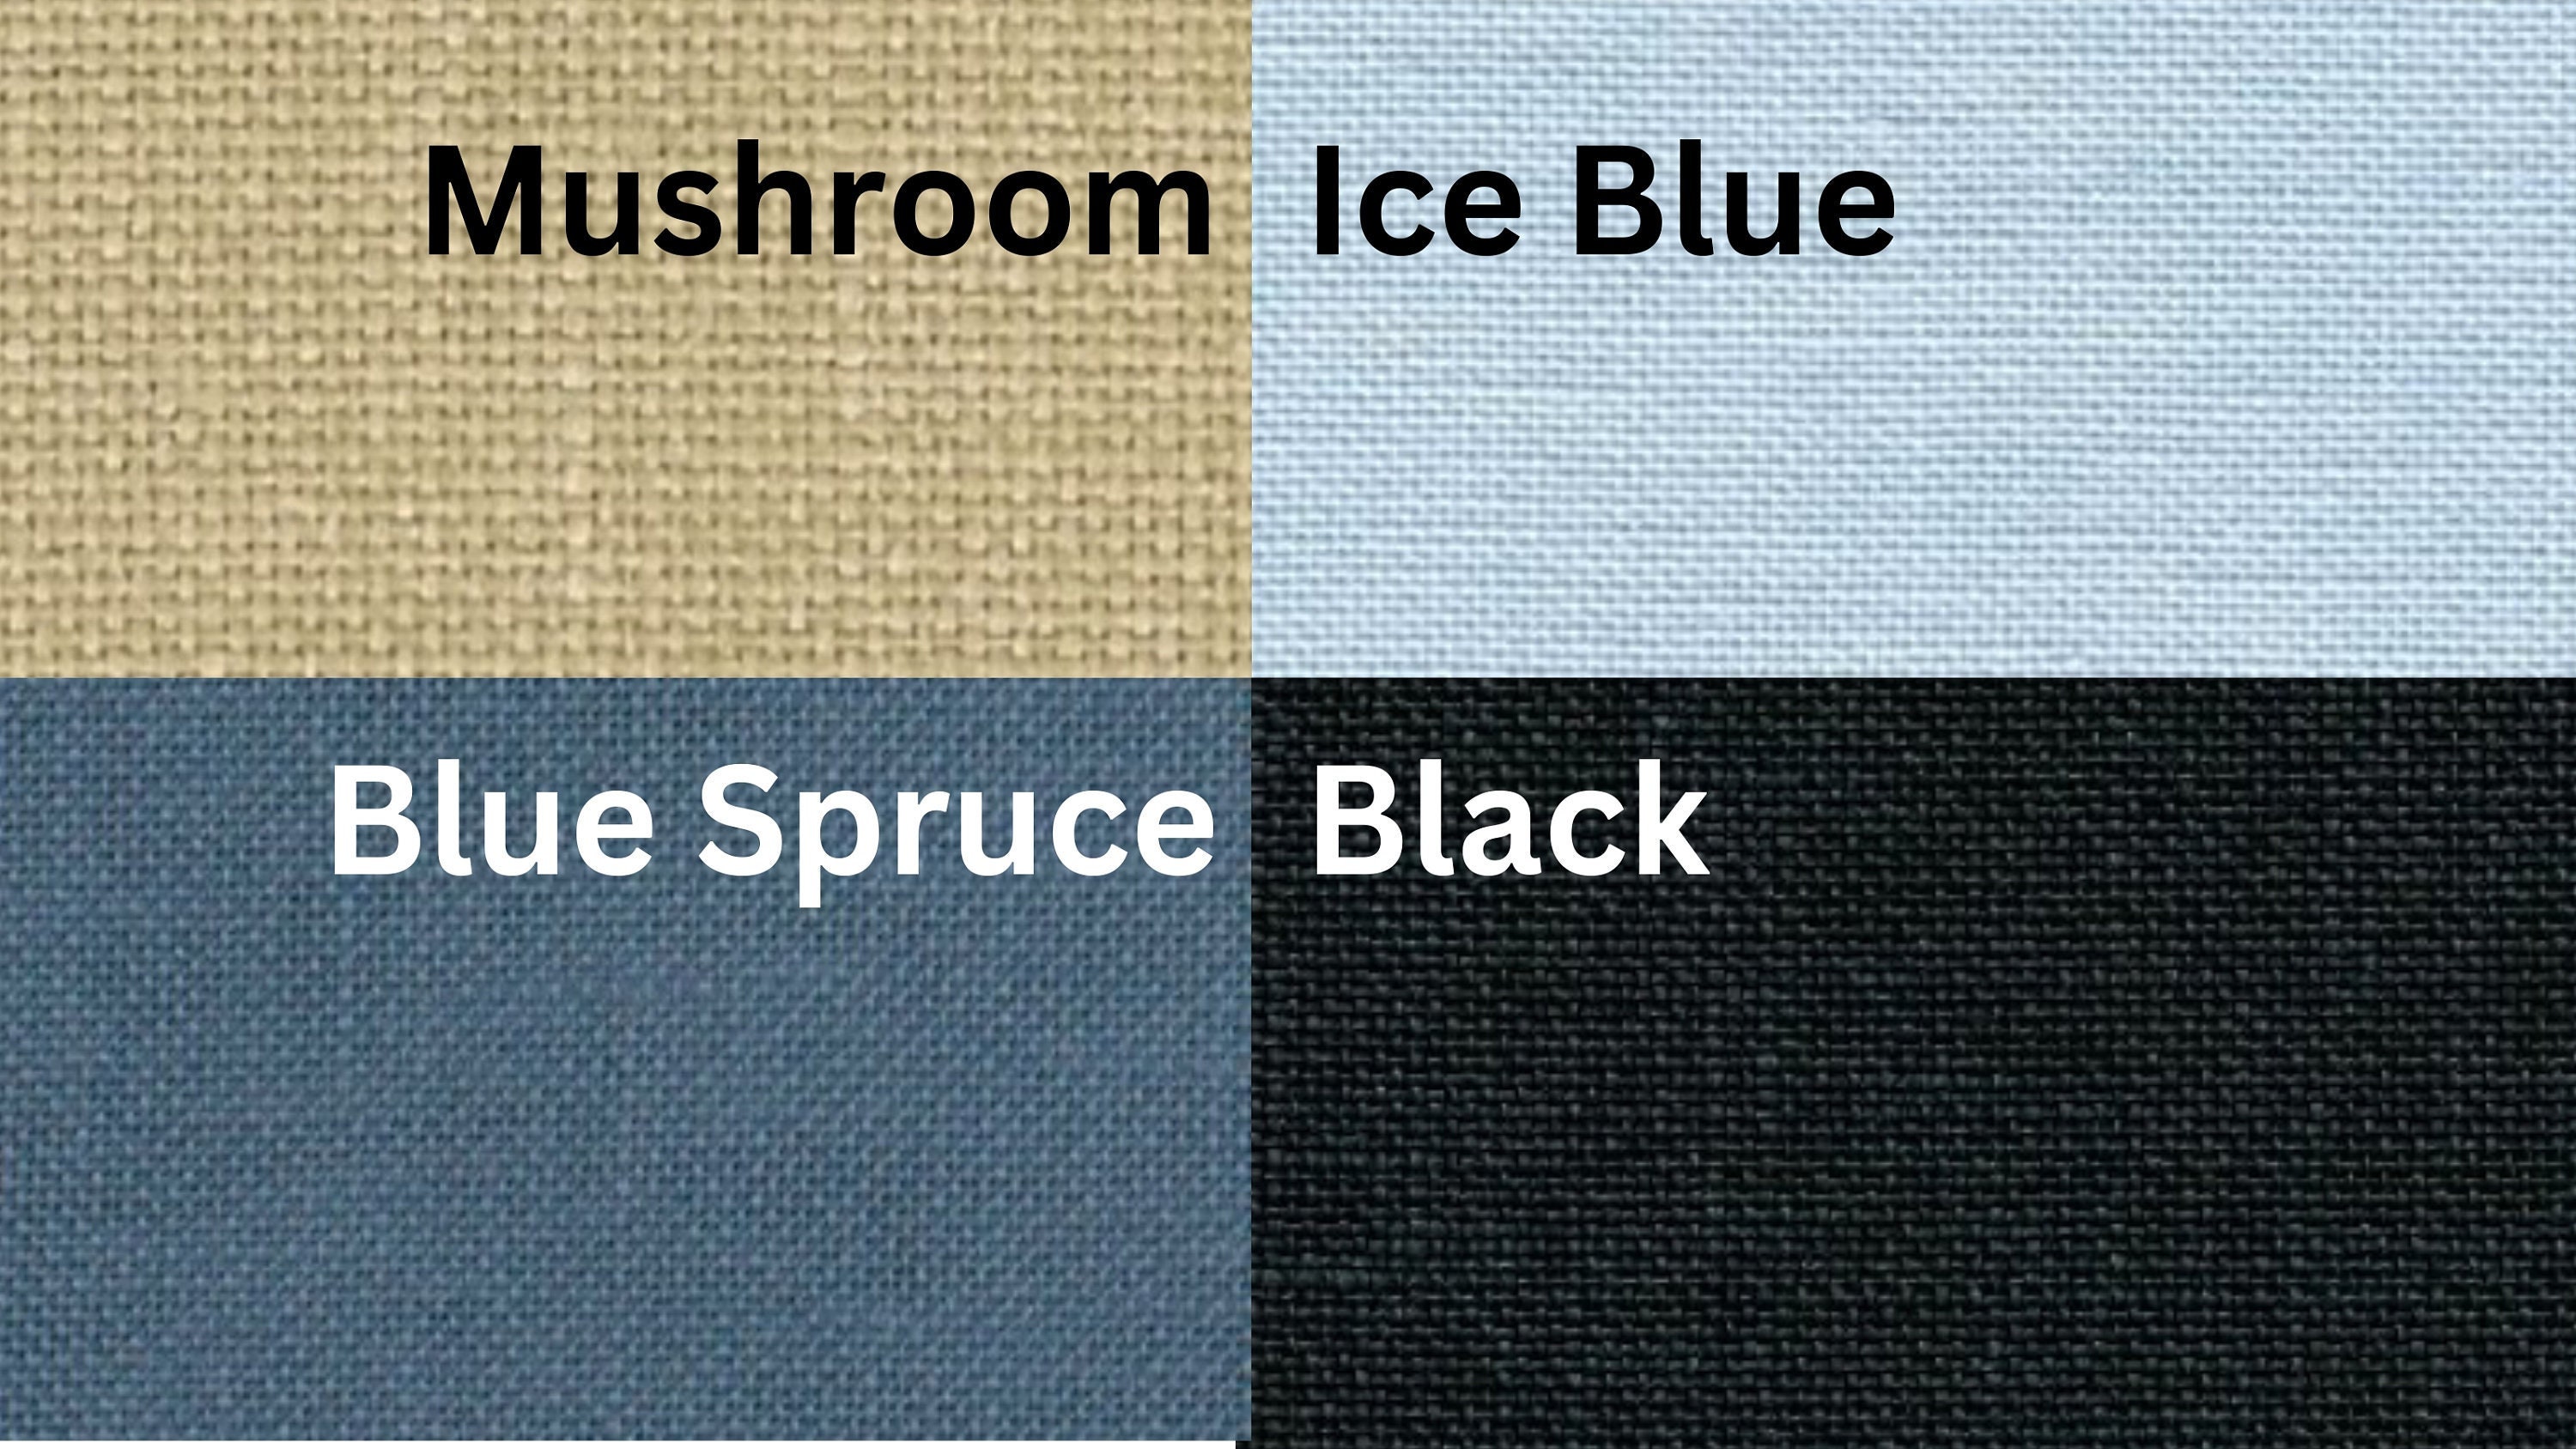 Cashel Black Linen Cross Stitch Fabric - 28 count - Stitched Modern